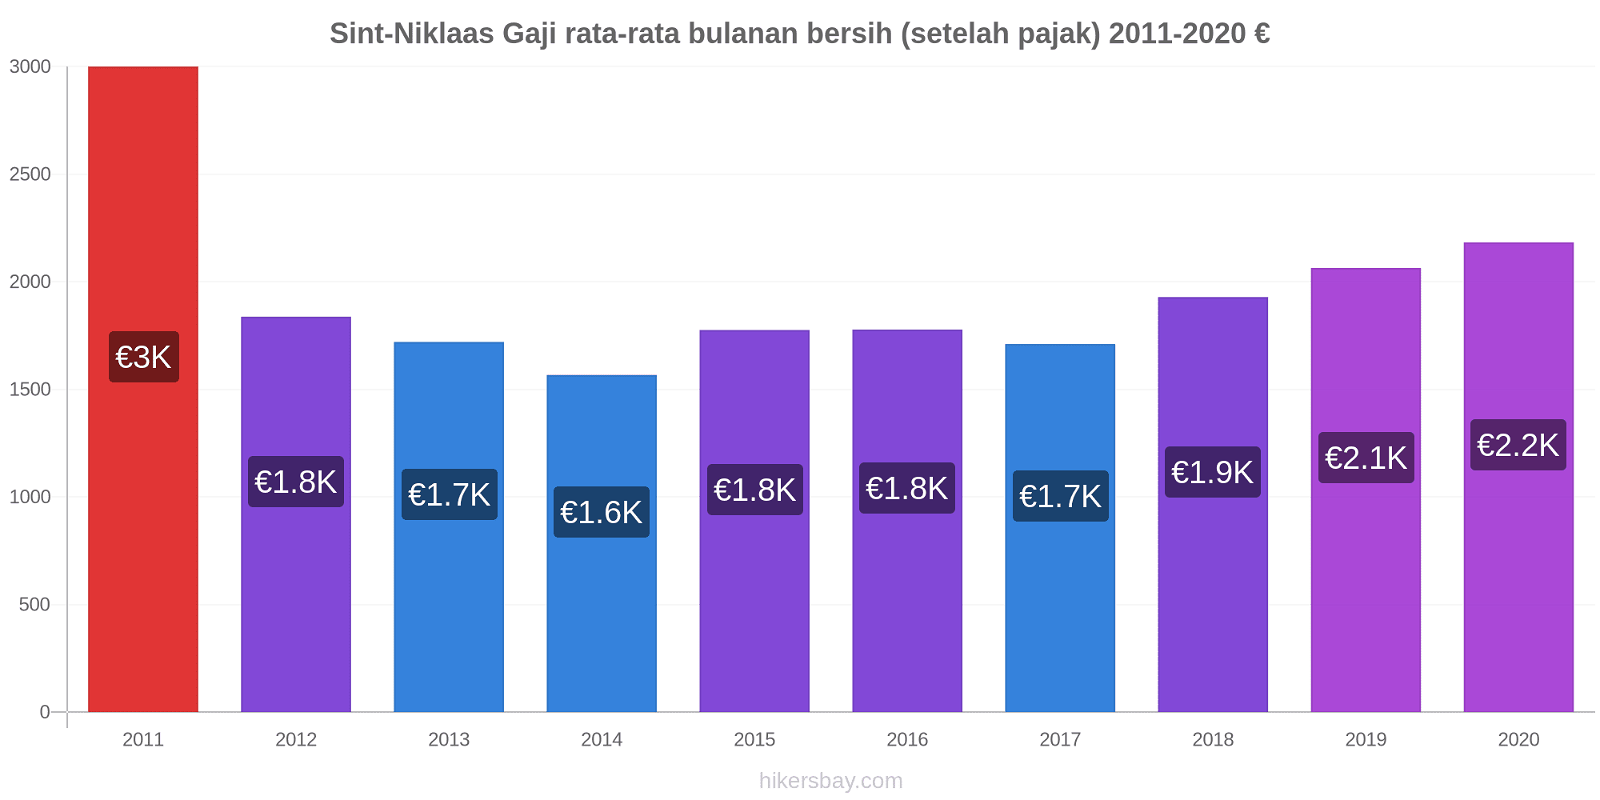 Sint-Niklaas perubahan harga Gaji rata-rata bulanan bersih (setelah pajak) hikersbay.com